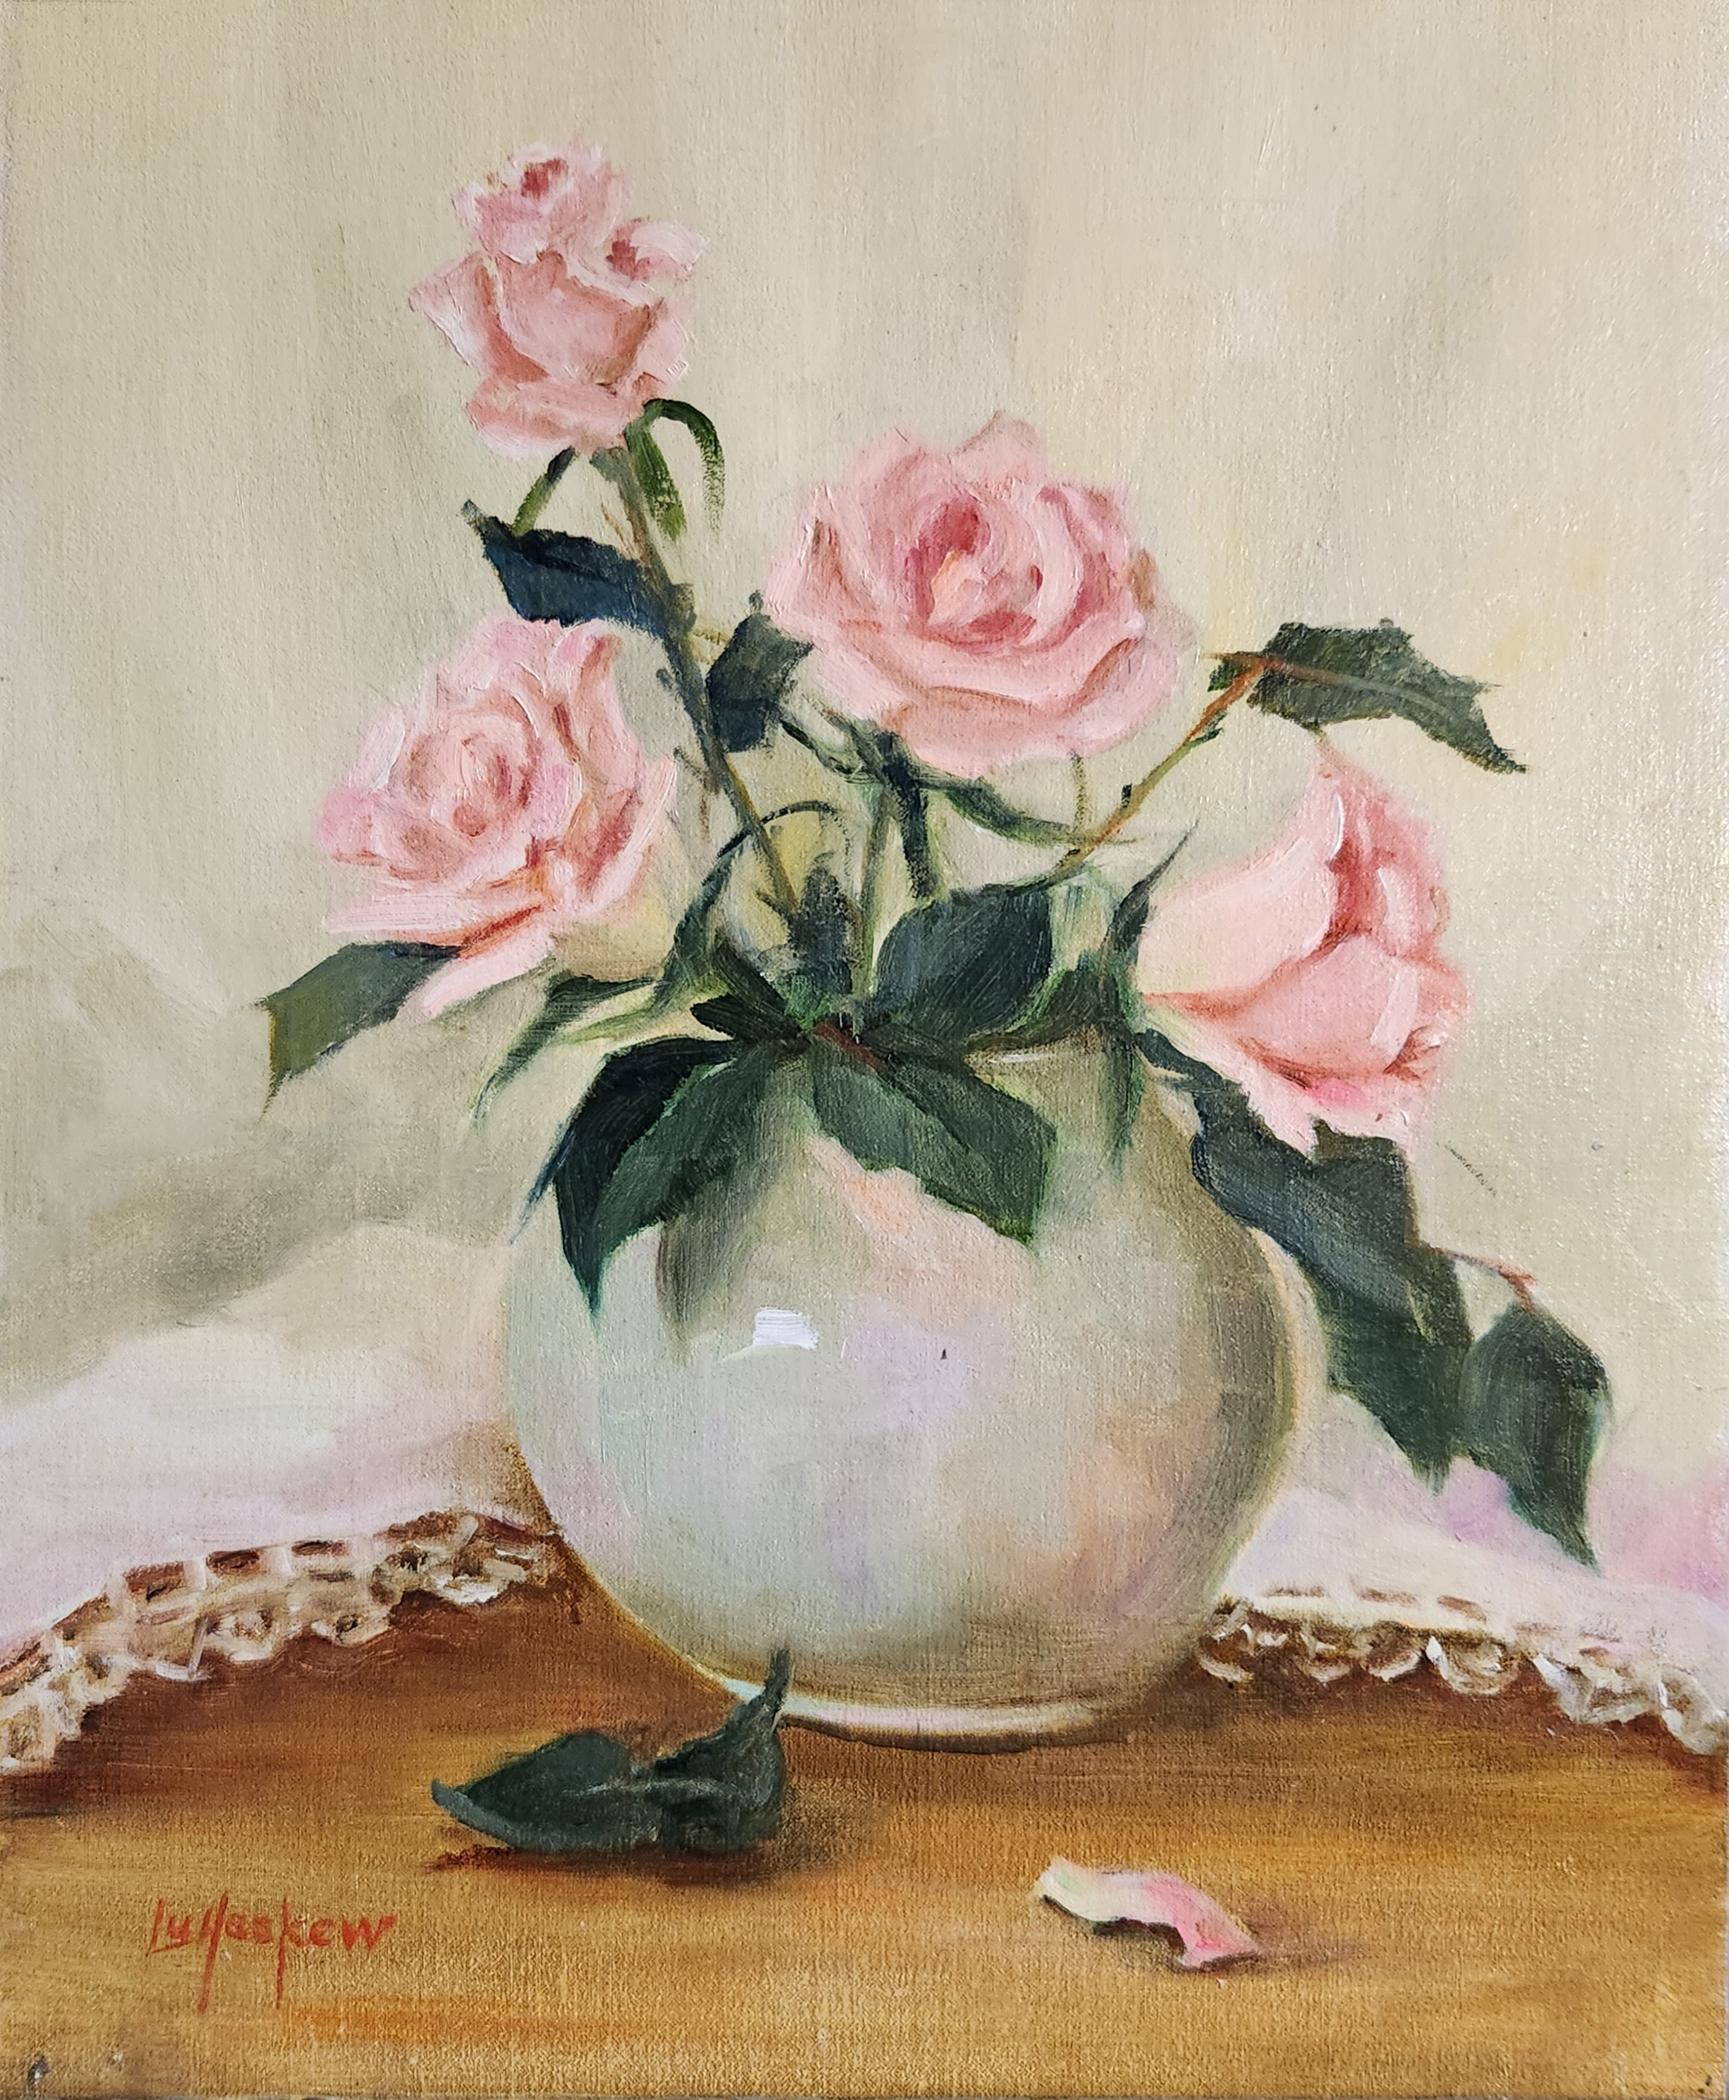 Still-Life Painting Lu Haskew - Roses roses, 15x12" huile sur carton